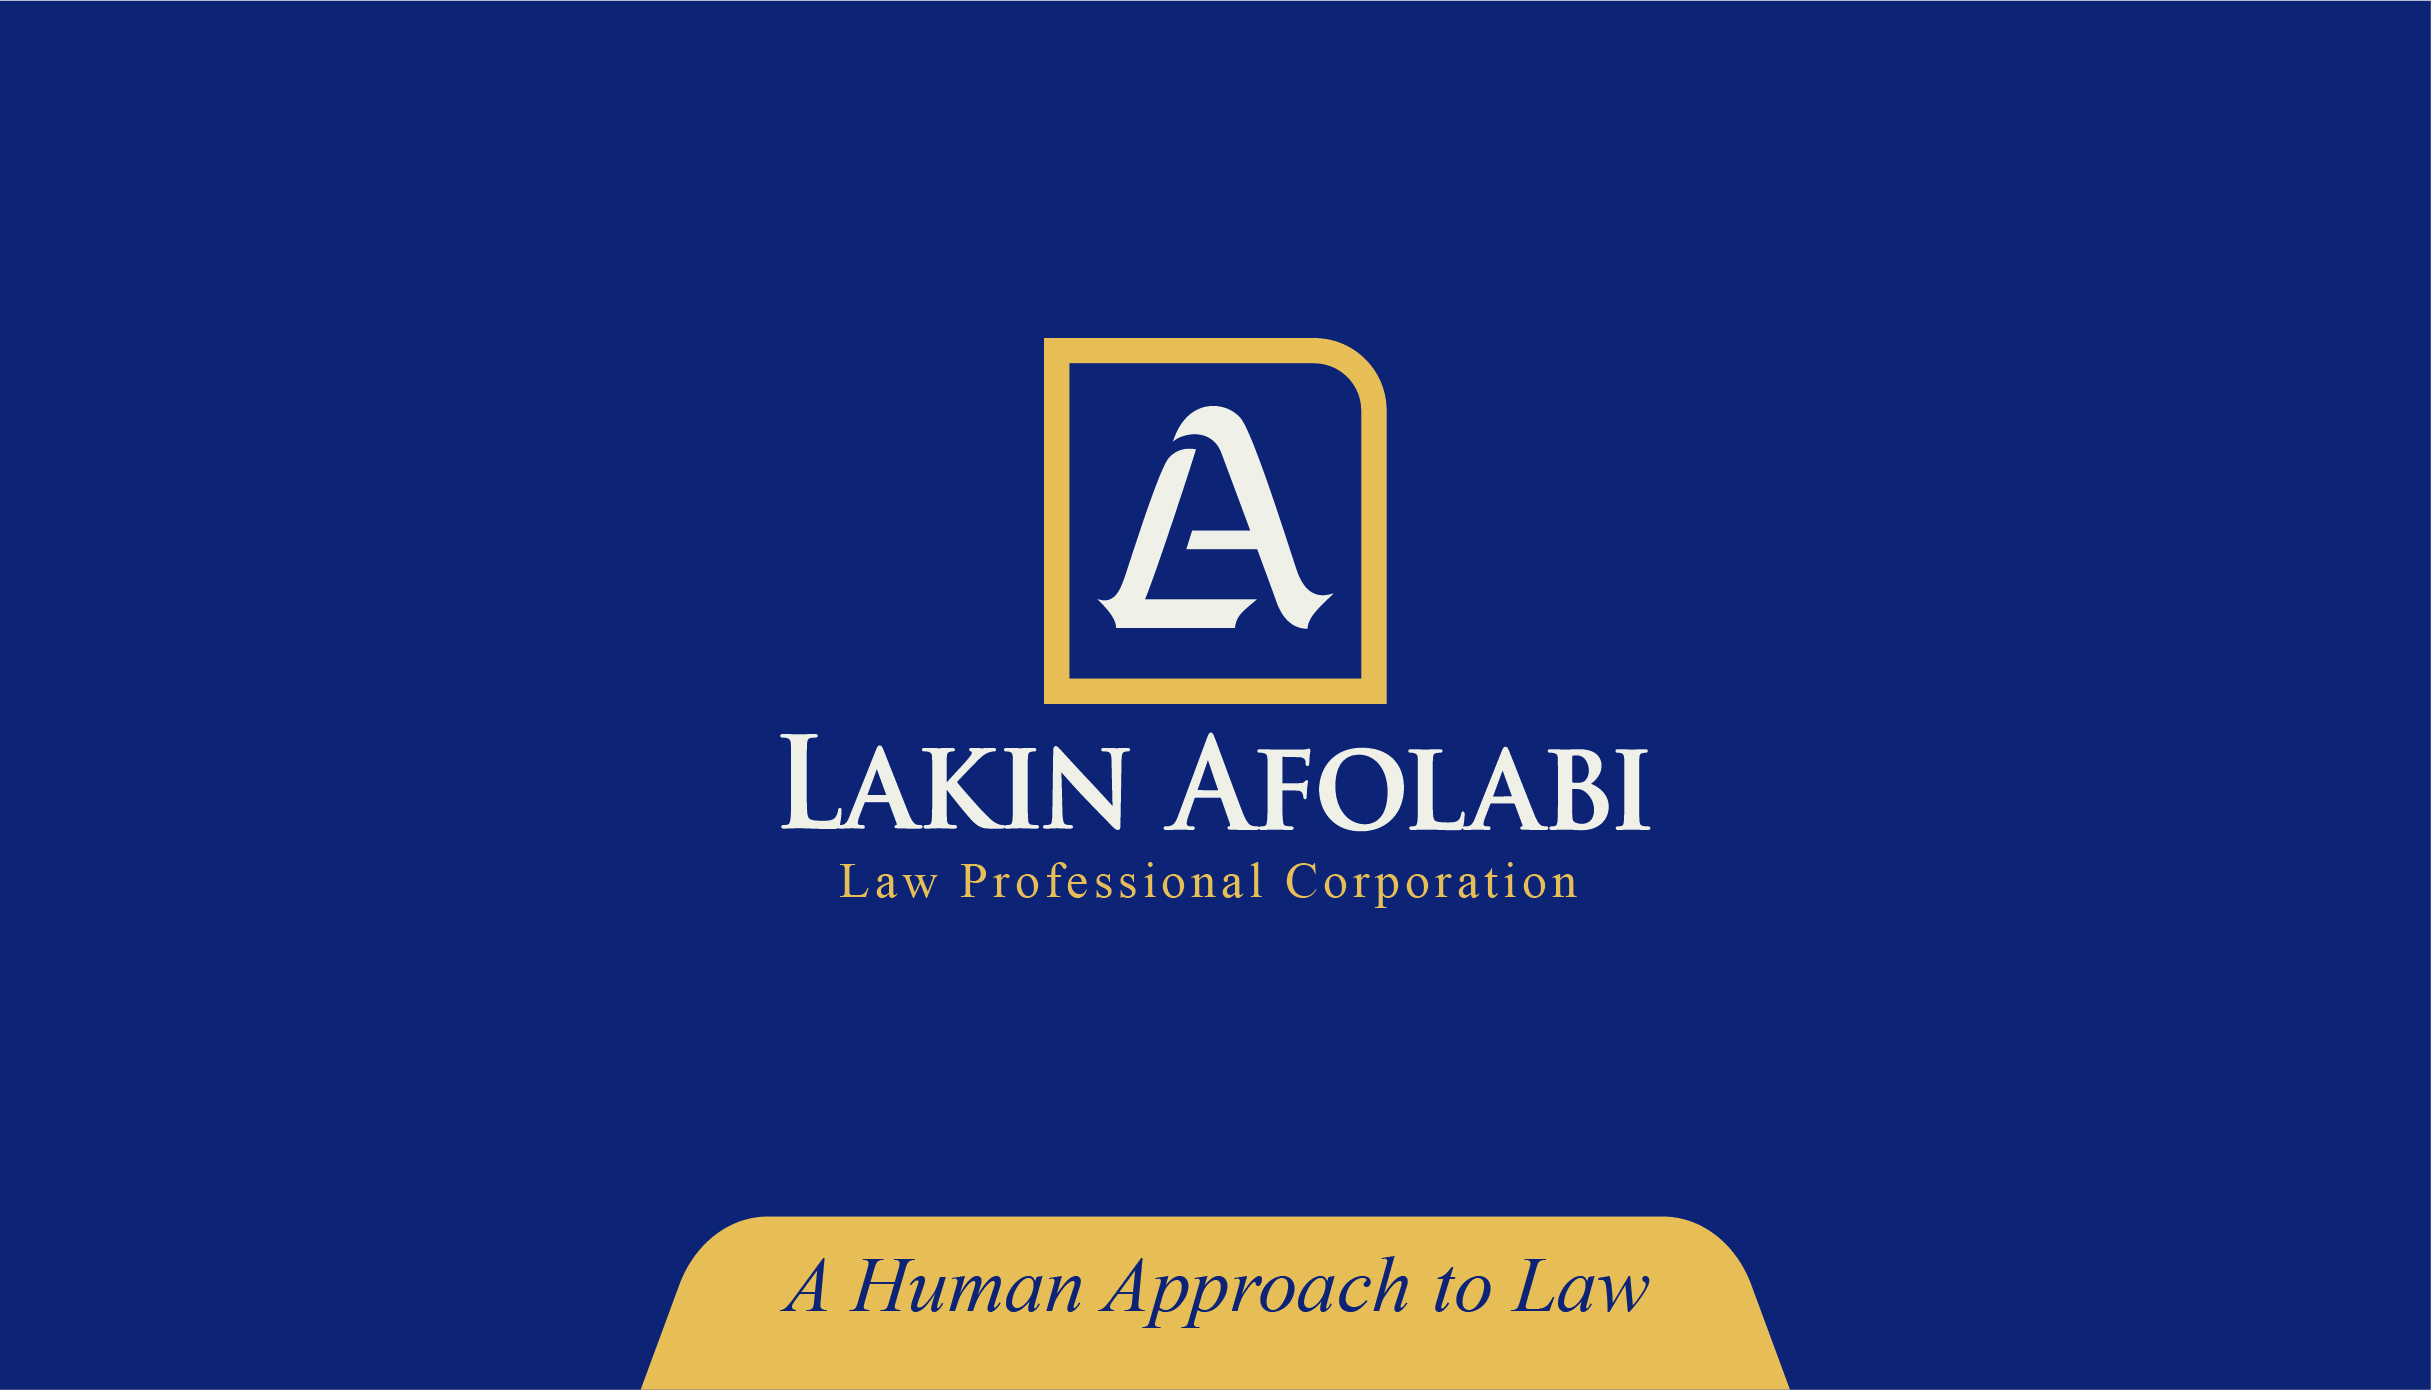 Lakin Afolabi Law Professional Corporation